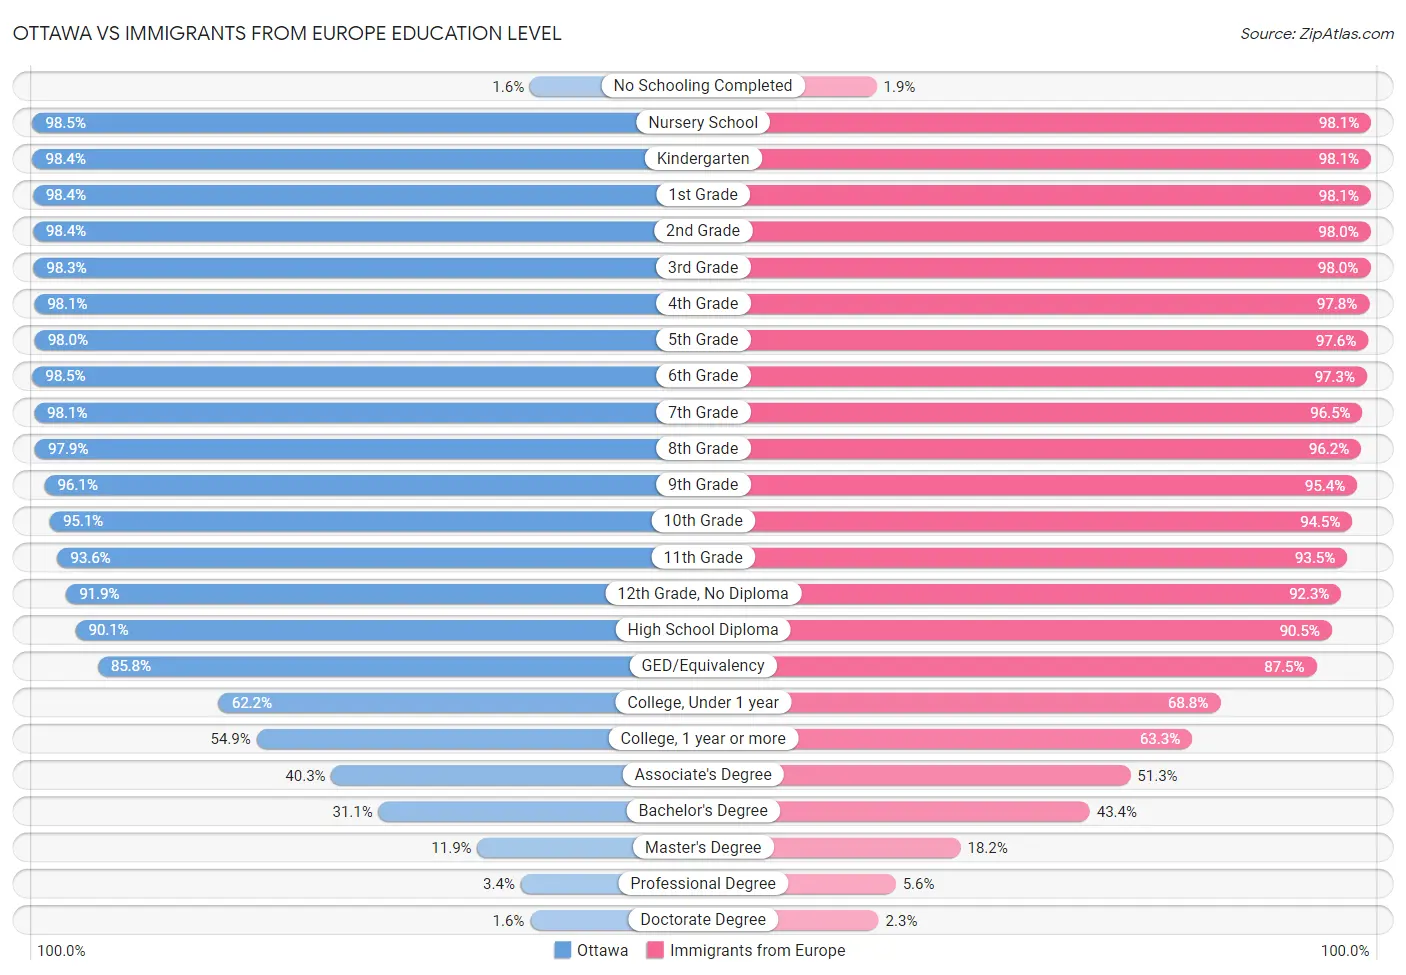 Ottawa vs Immigrants from Europe Education Level